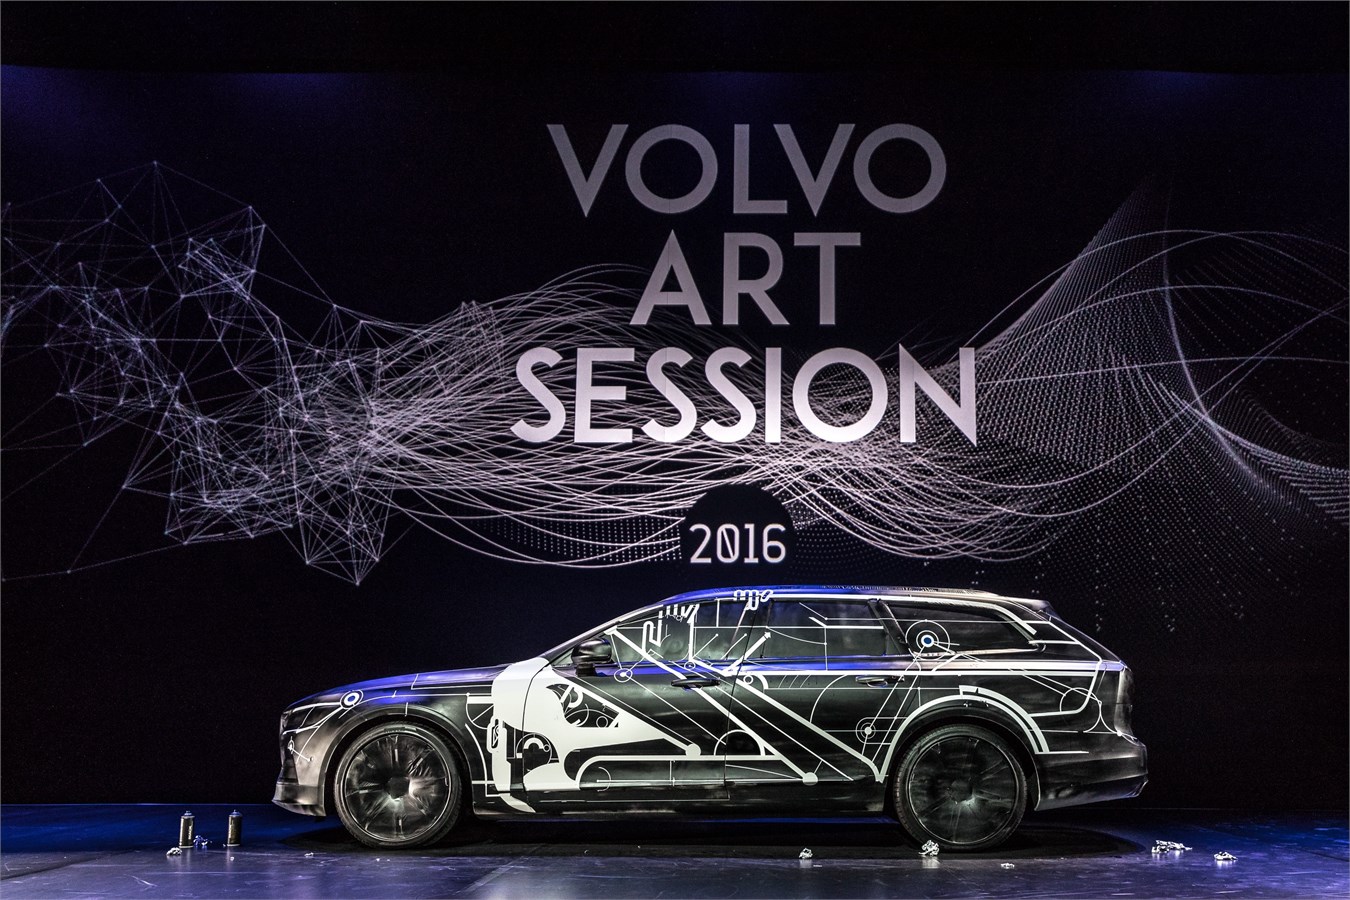 Volvo Art Session 2016